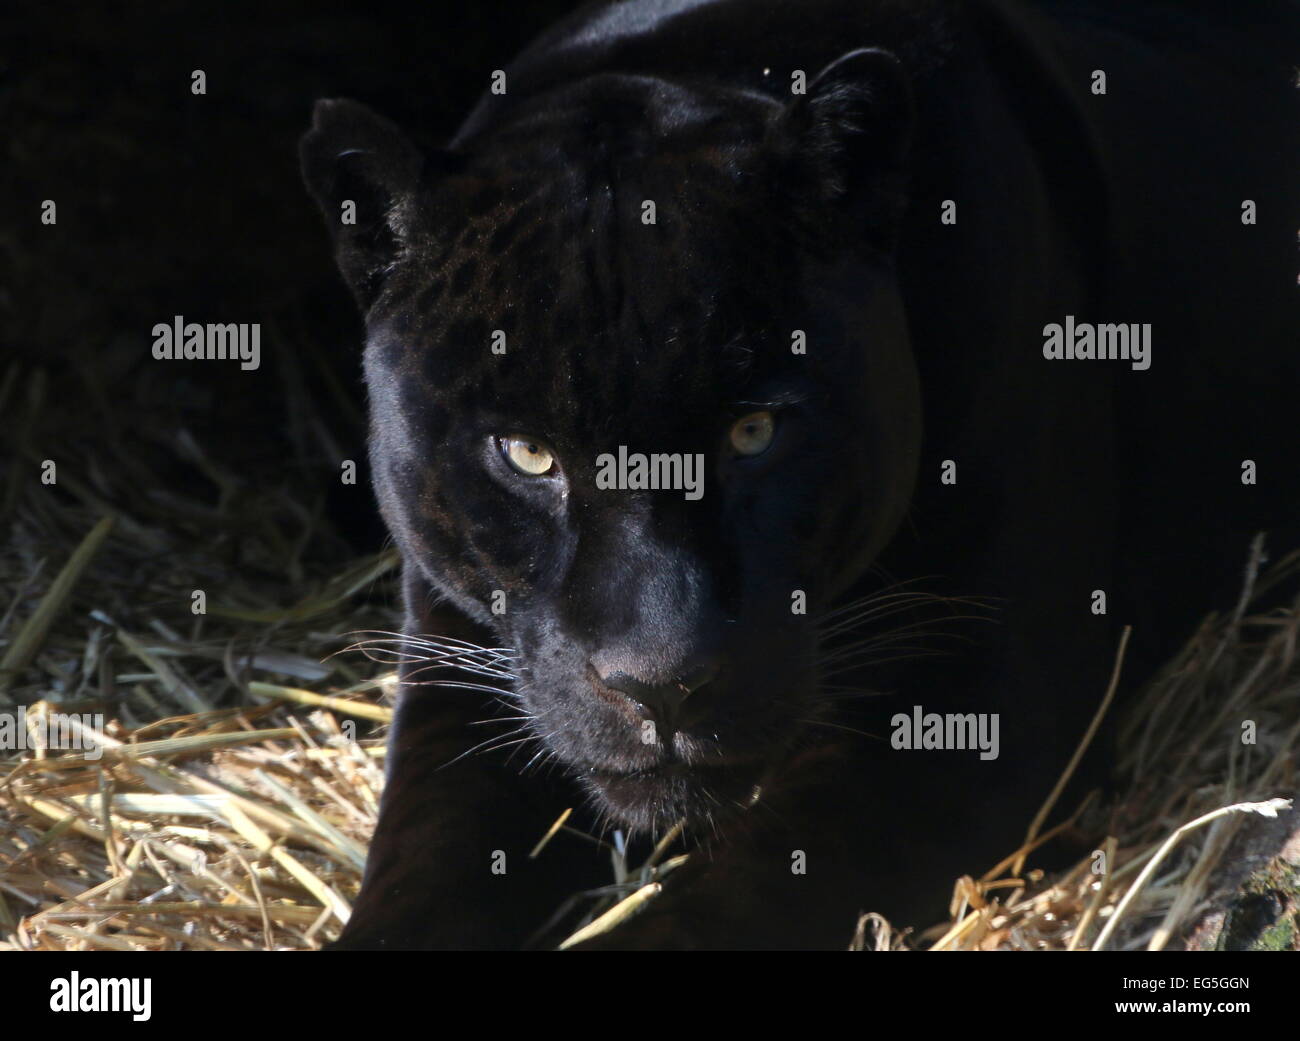 South American Melanistic Black Jaguar (Panthera onca), close-up of the head Stock Photo